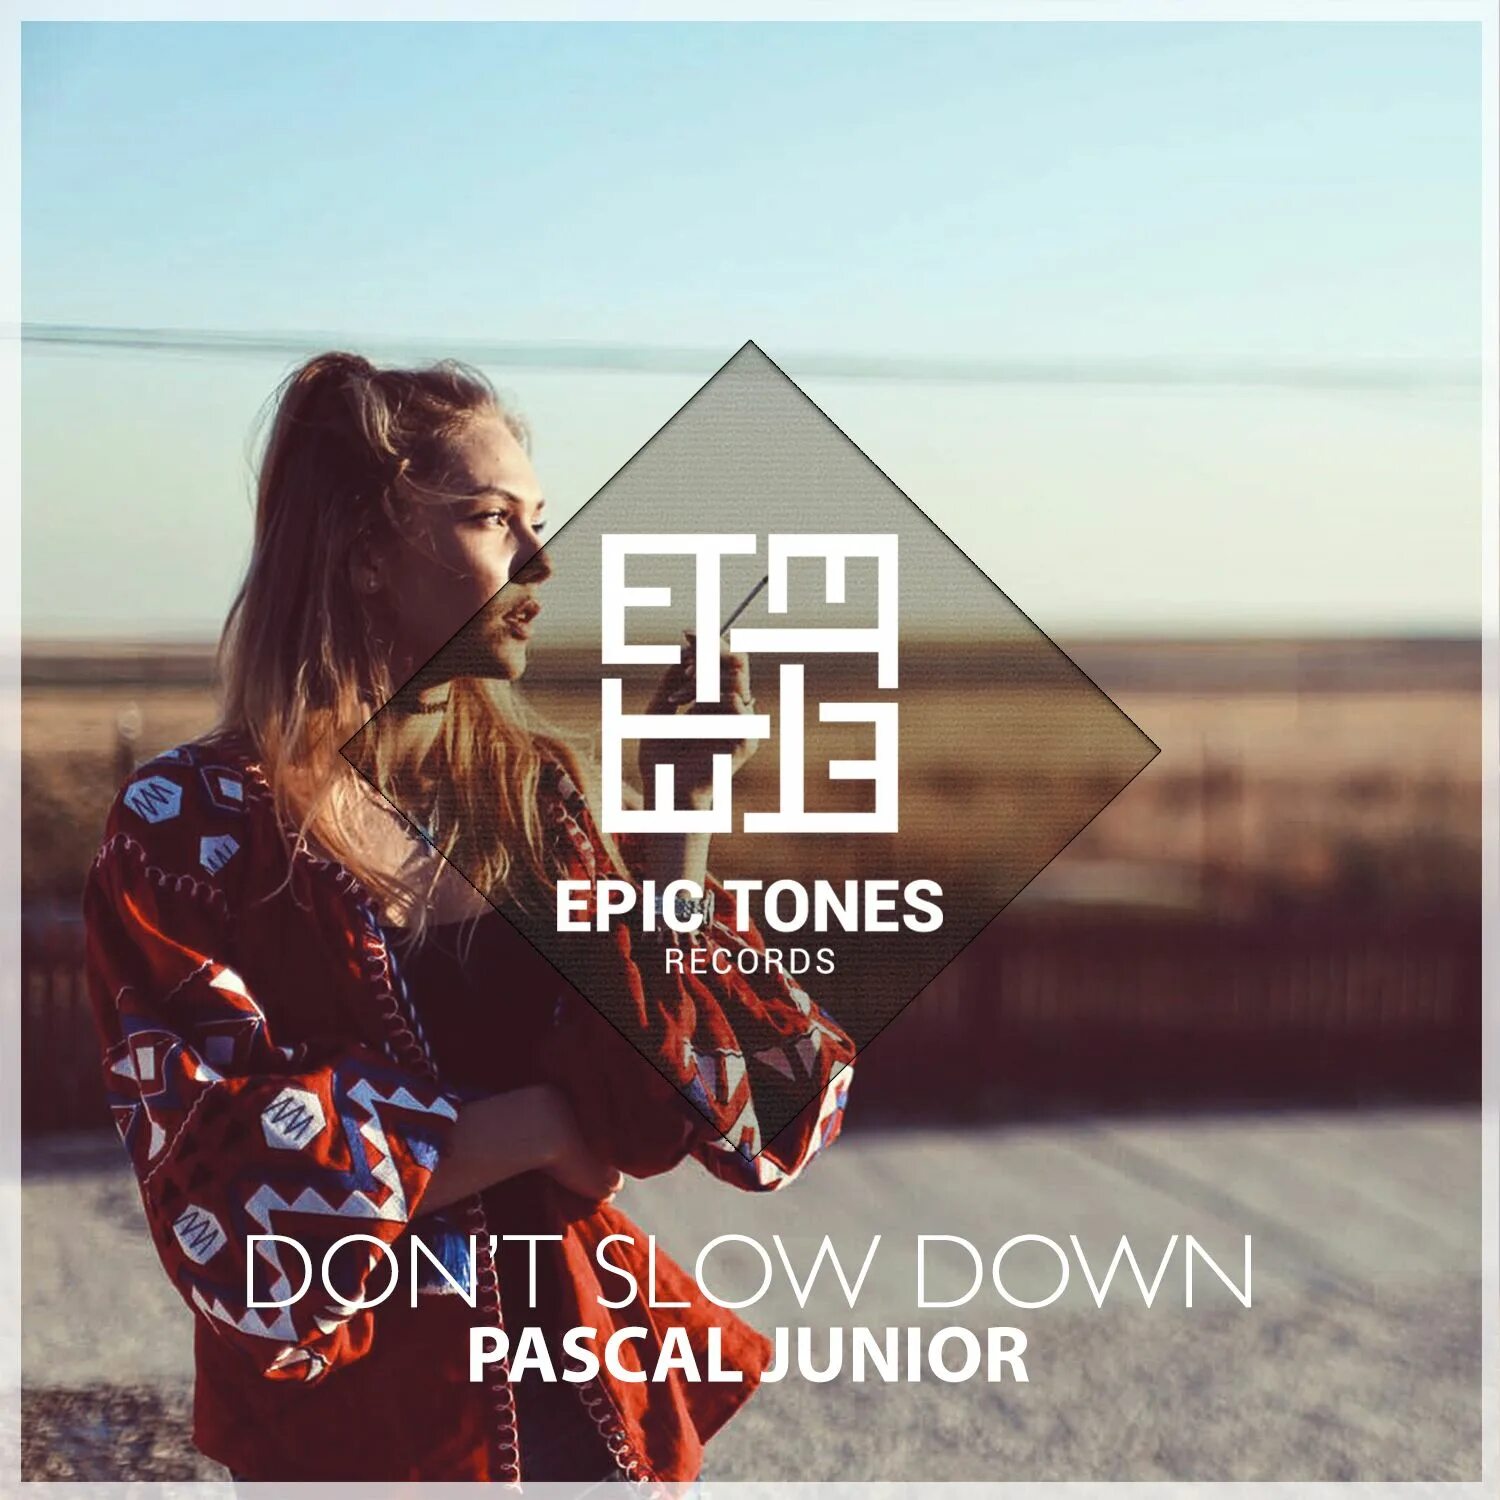 Pascal Junior. Pascal Junior - Slow down. Паскаль Джуниор фото. Down to в Паскале. Pascal remix